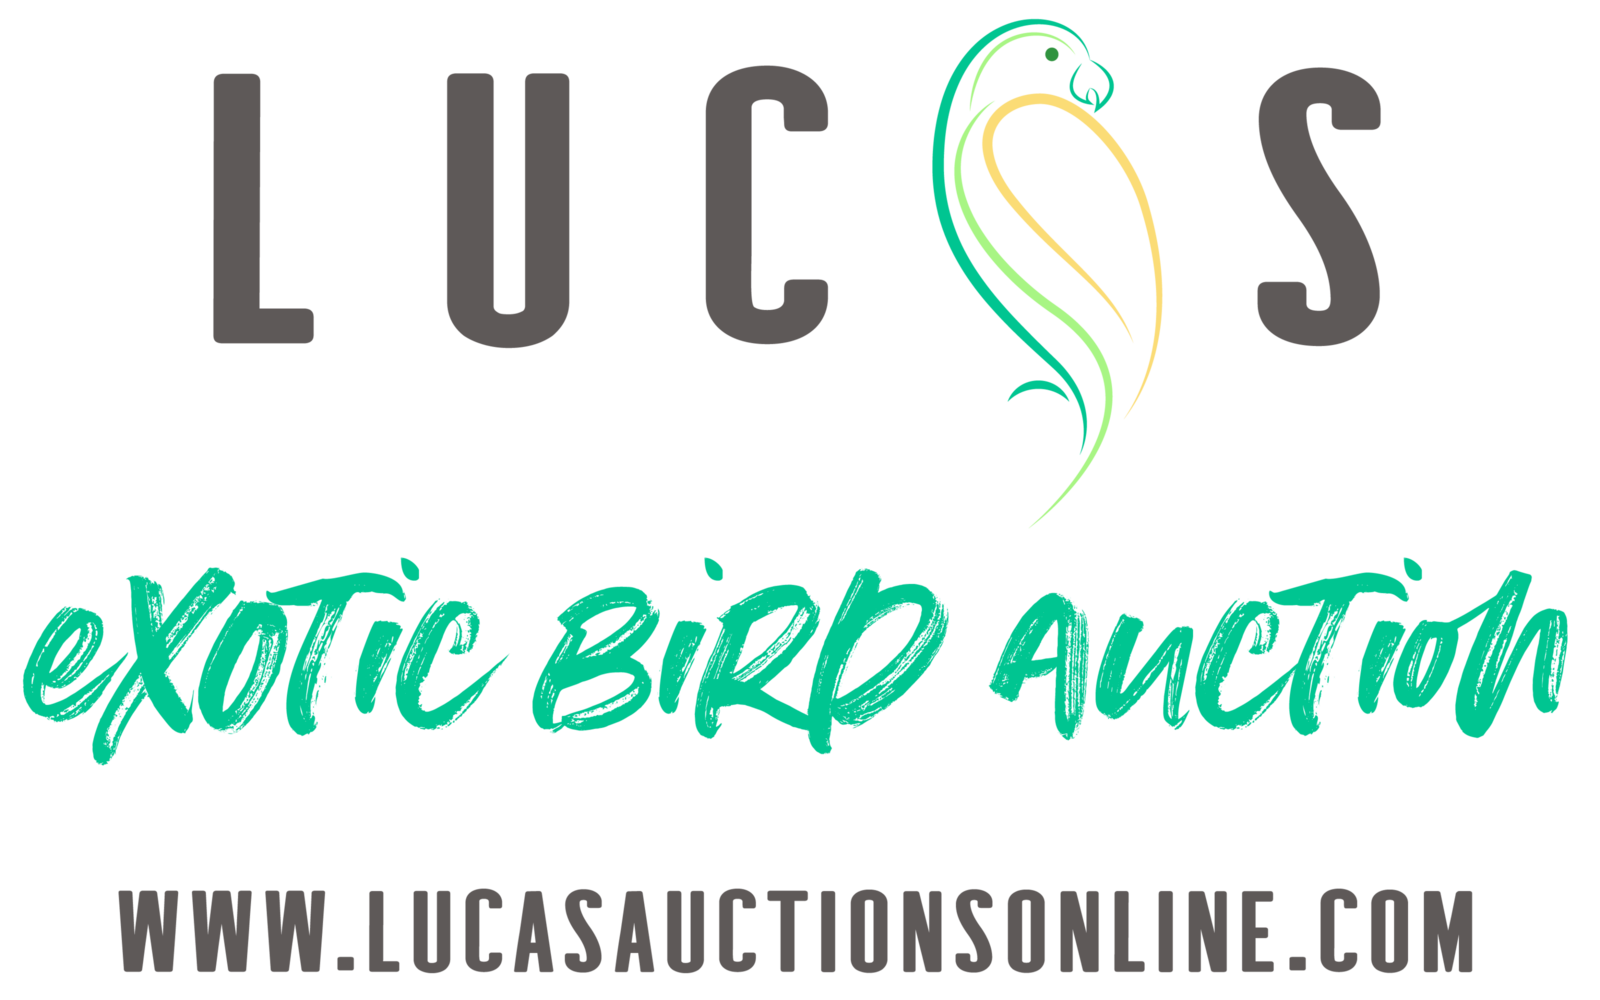 lucas exotic bird auction_main logo